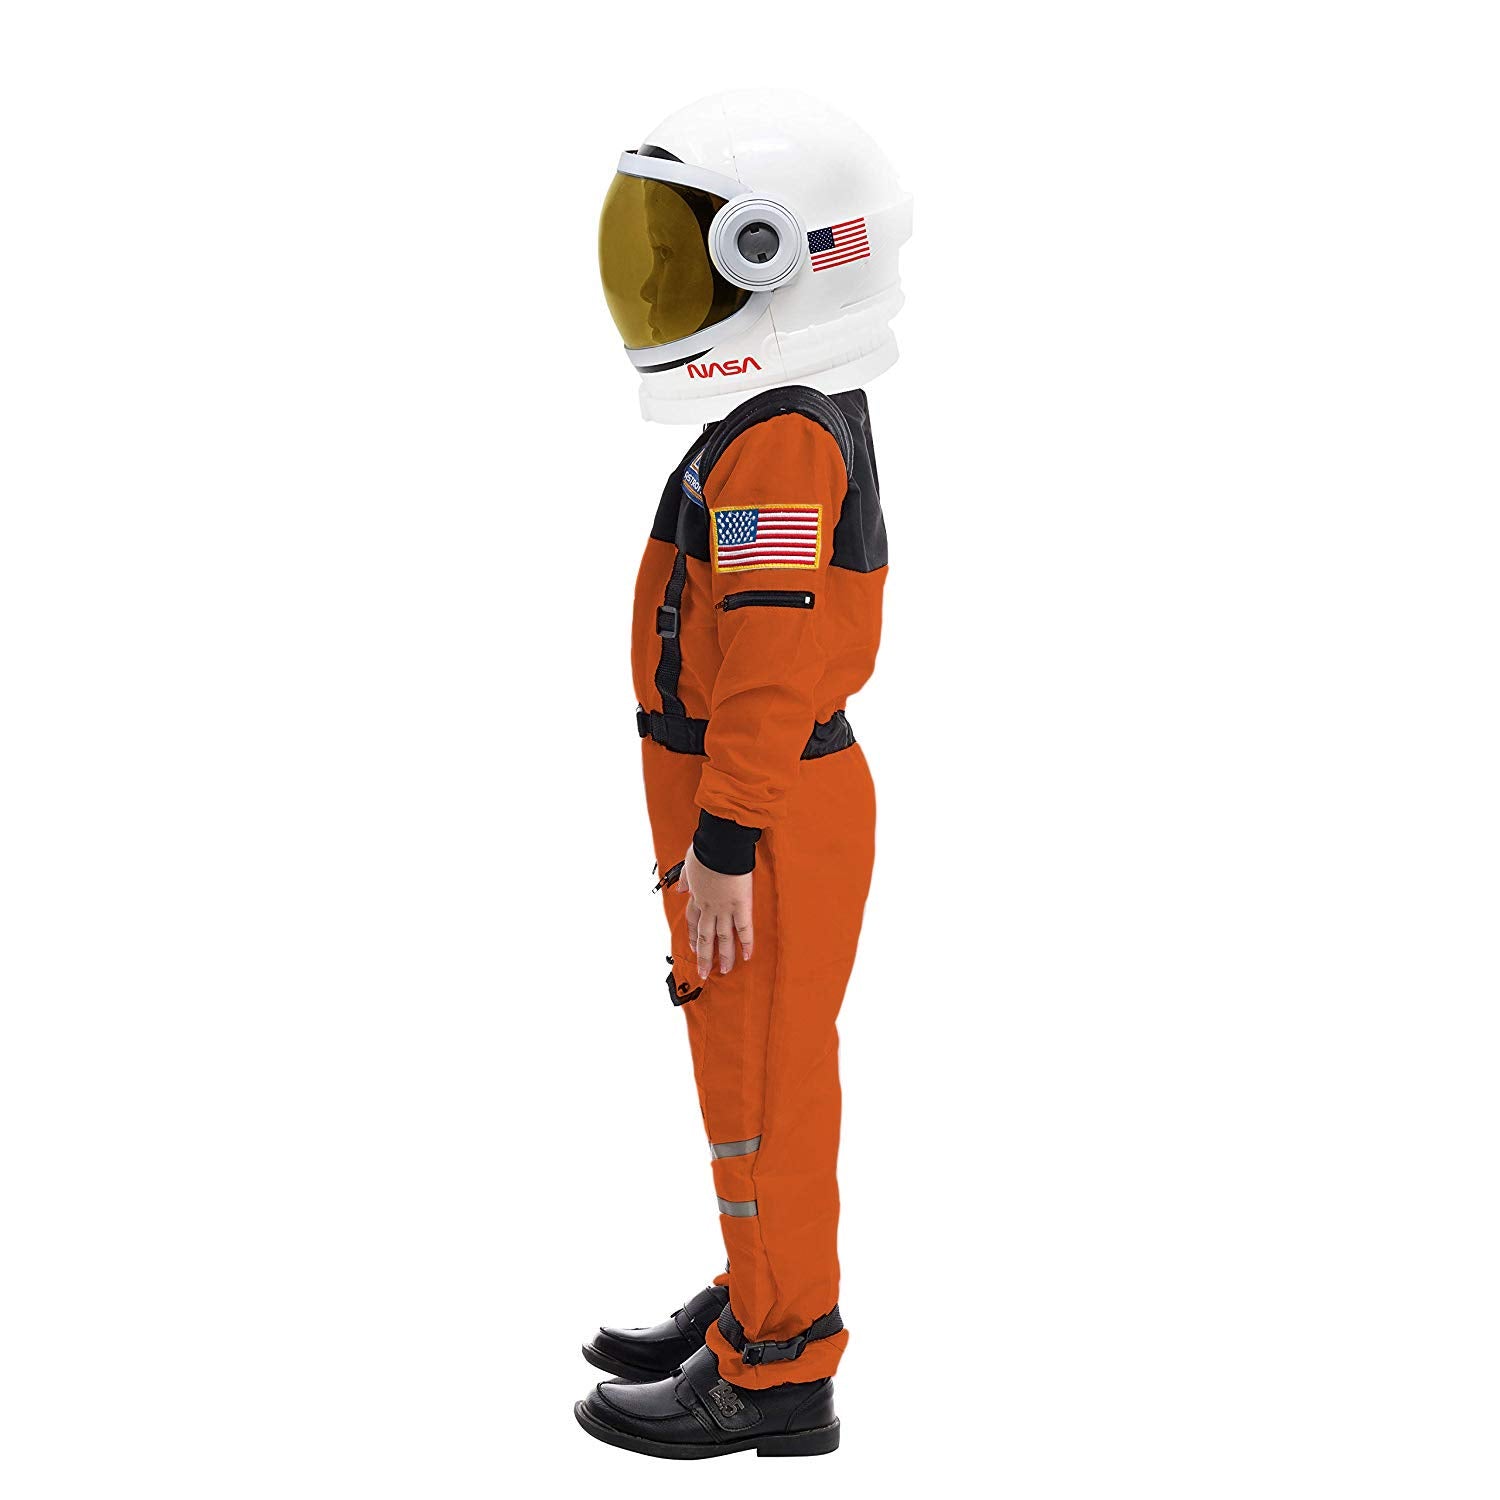 Astronaut NASA Pilot Orange Costume Movable Space Visor Kids Helmet Halloween.